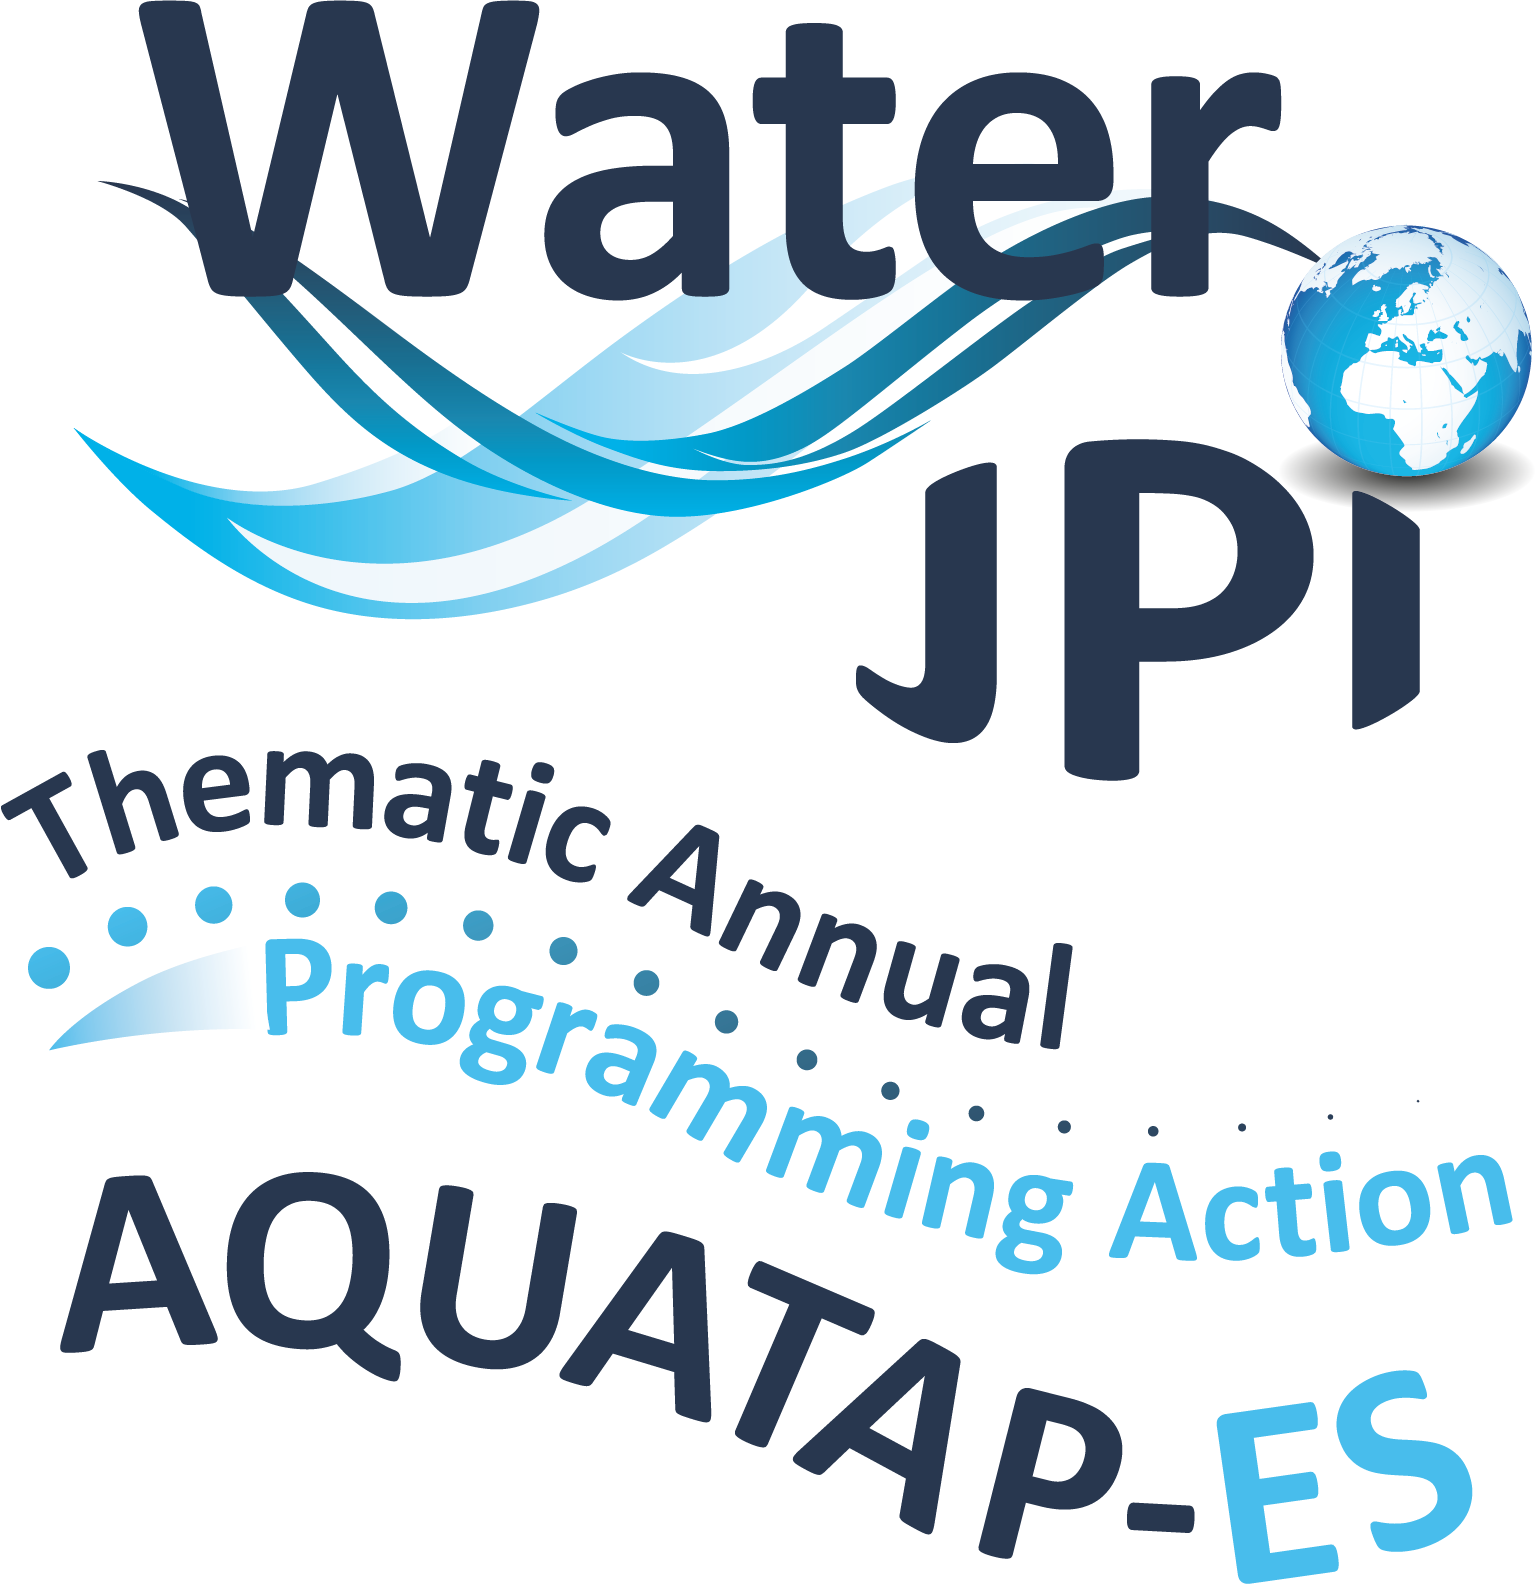 Water-AquatapES-Aug19-v4.jpg